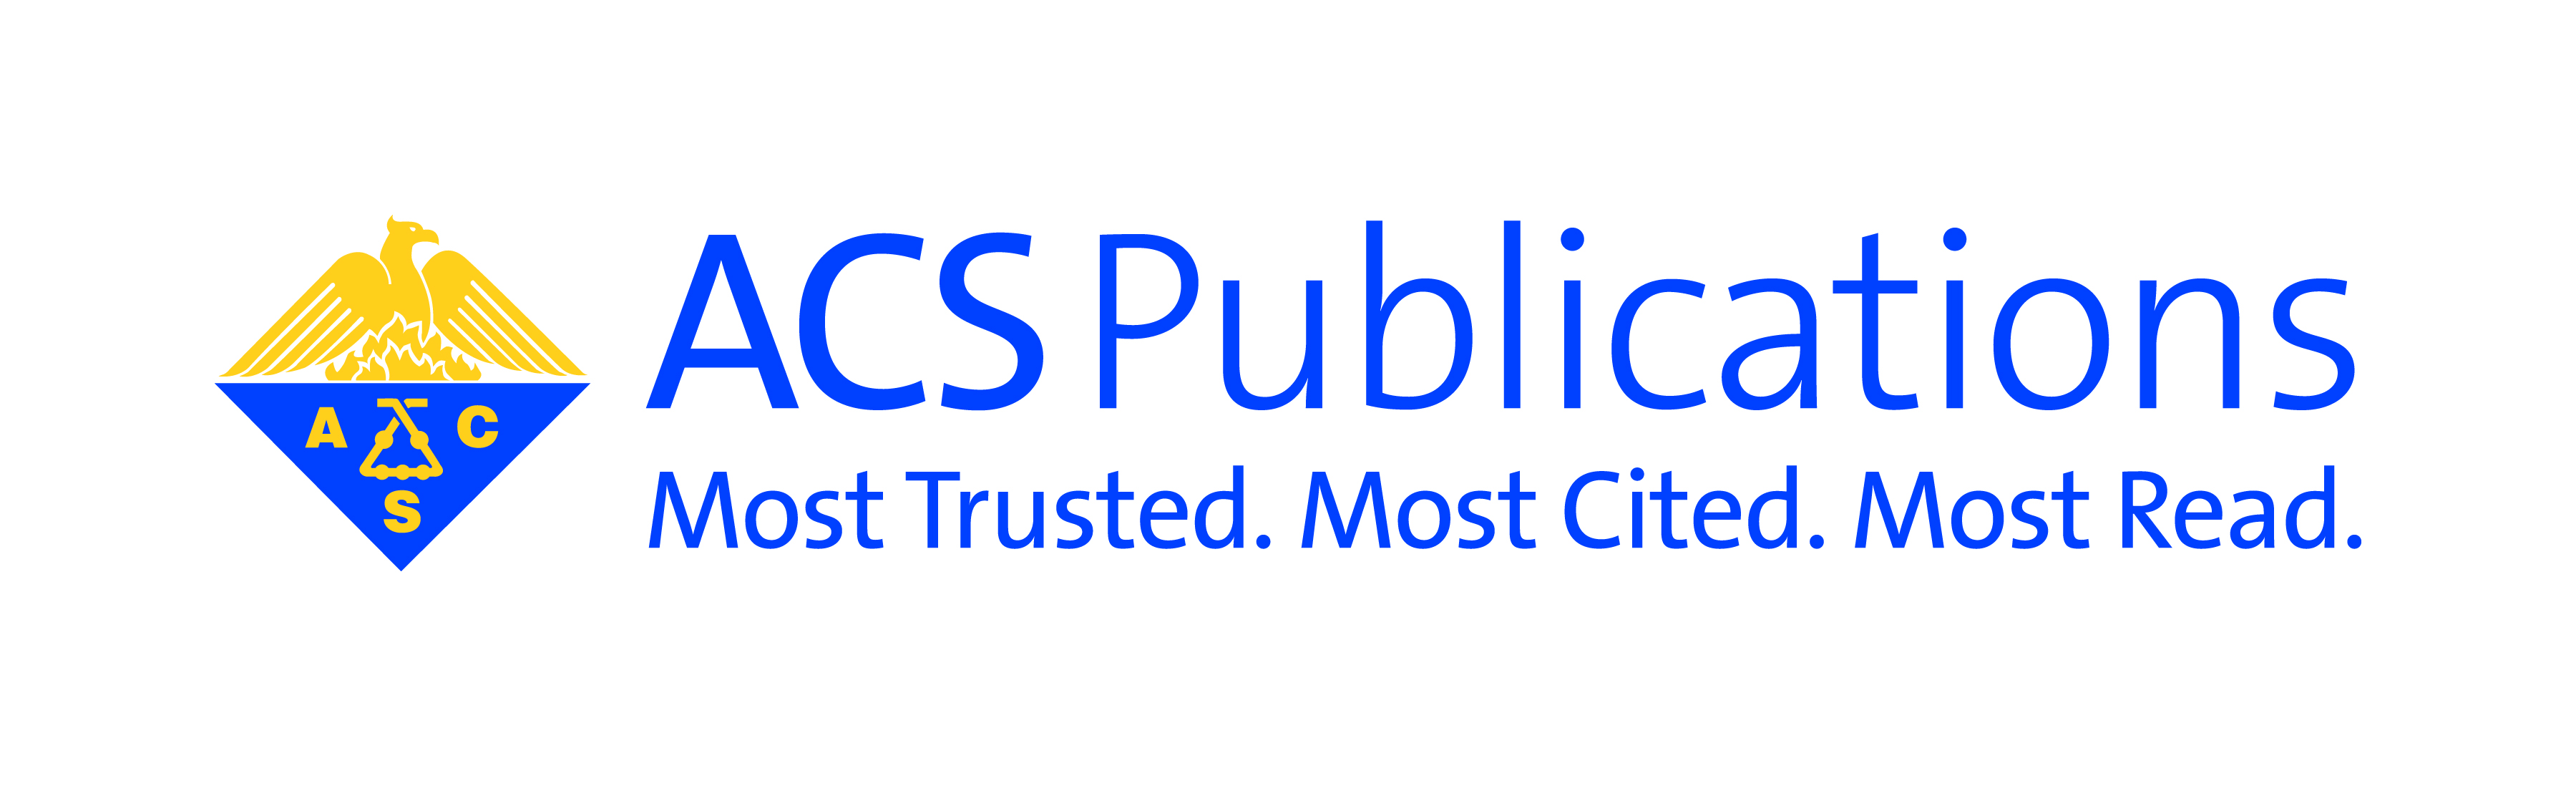 ACS Publications Sponsor